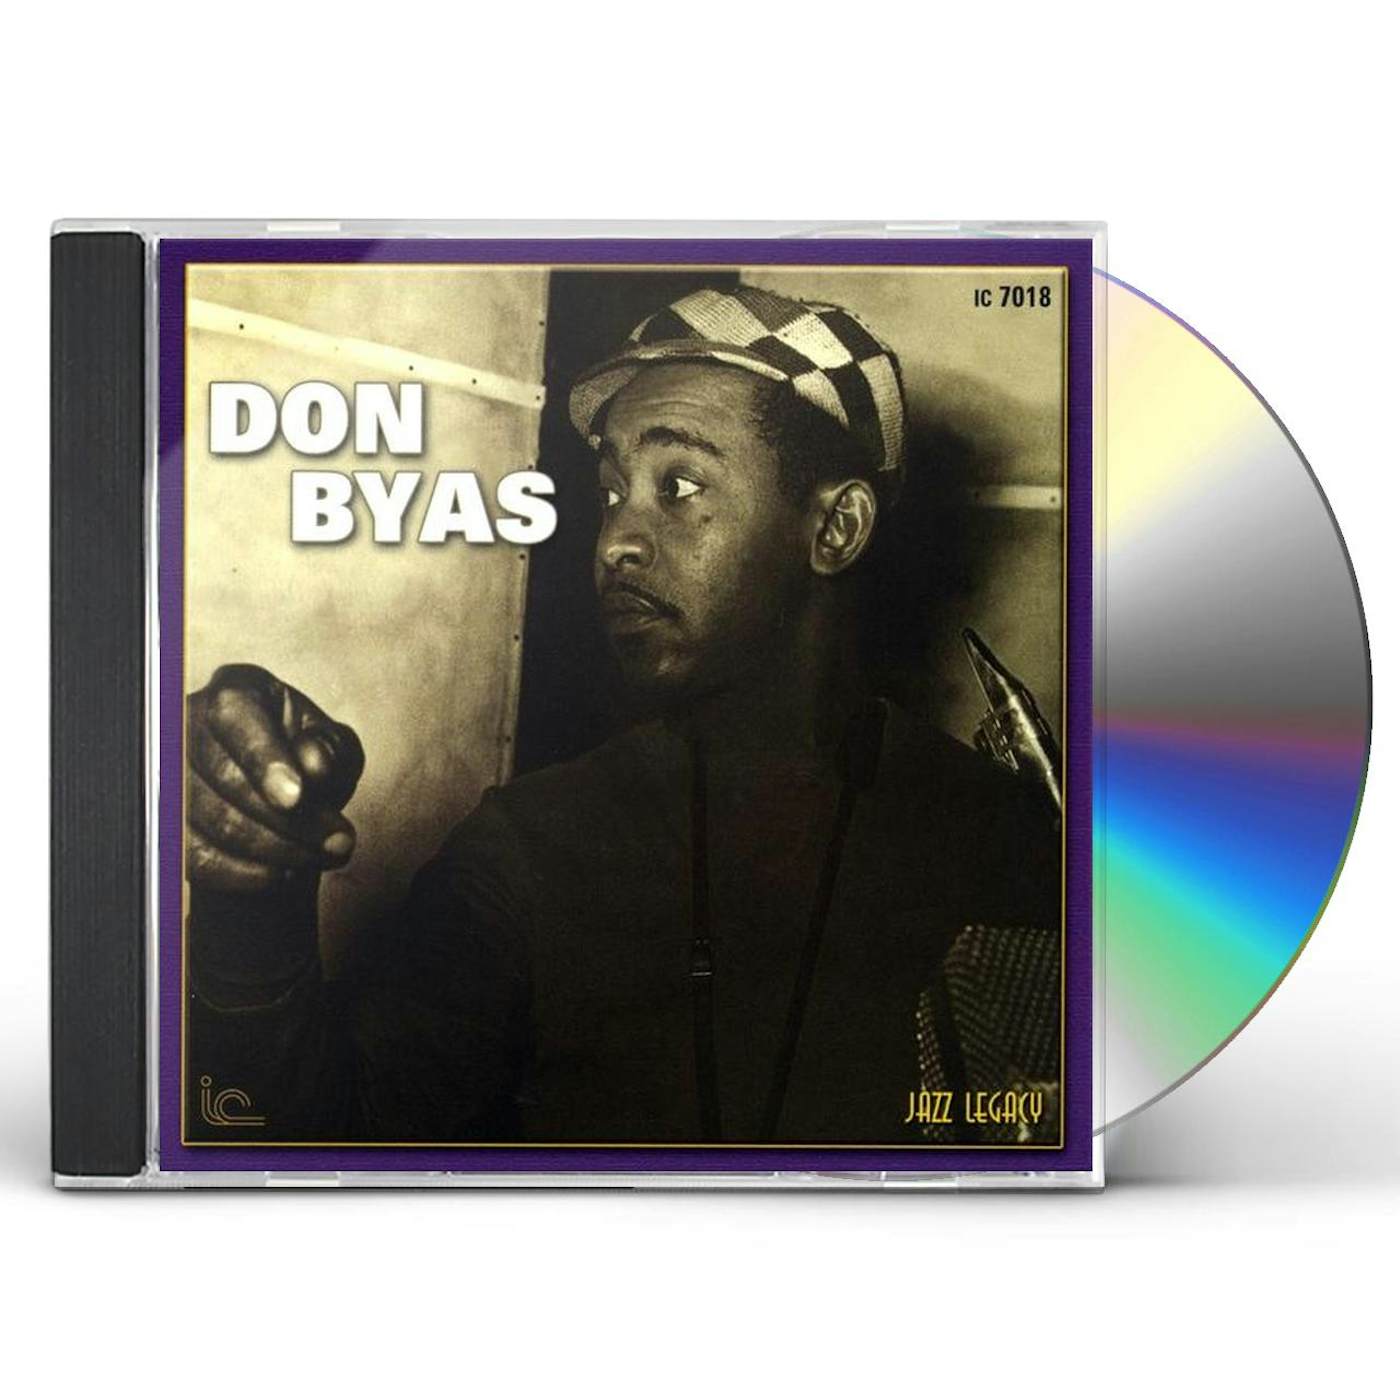 DON BYAS CD